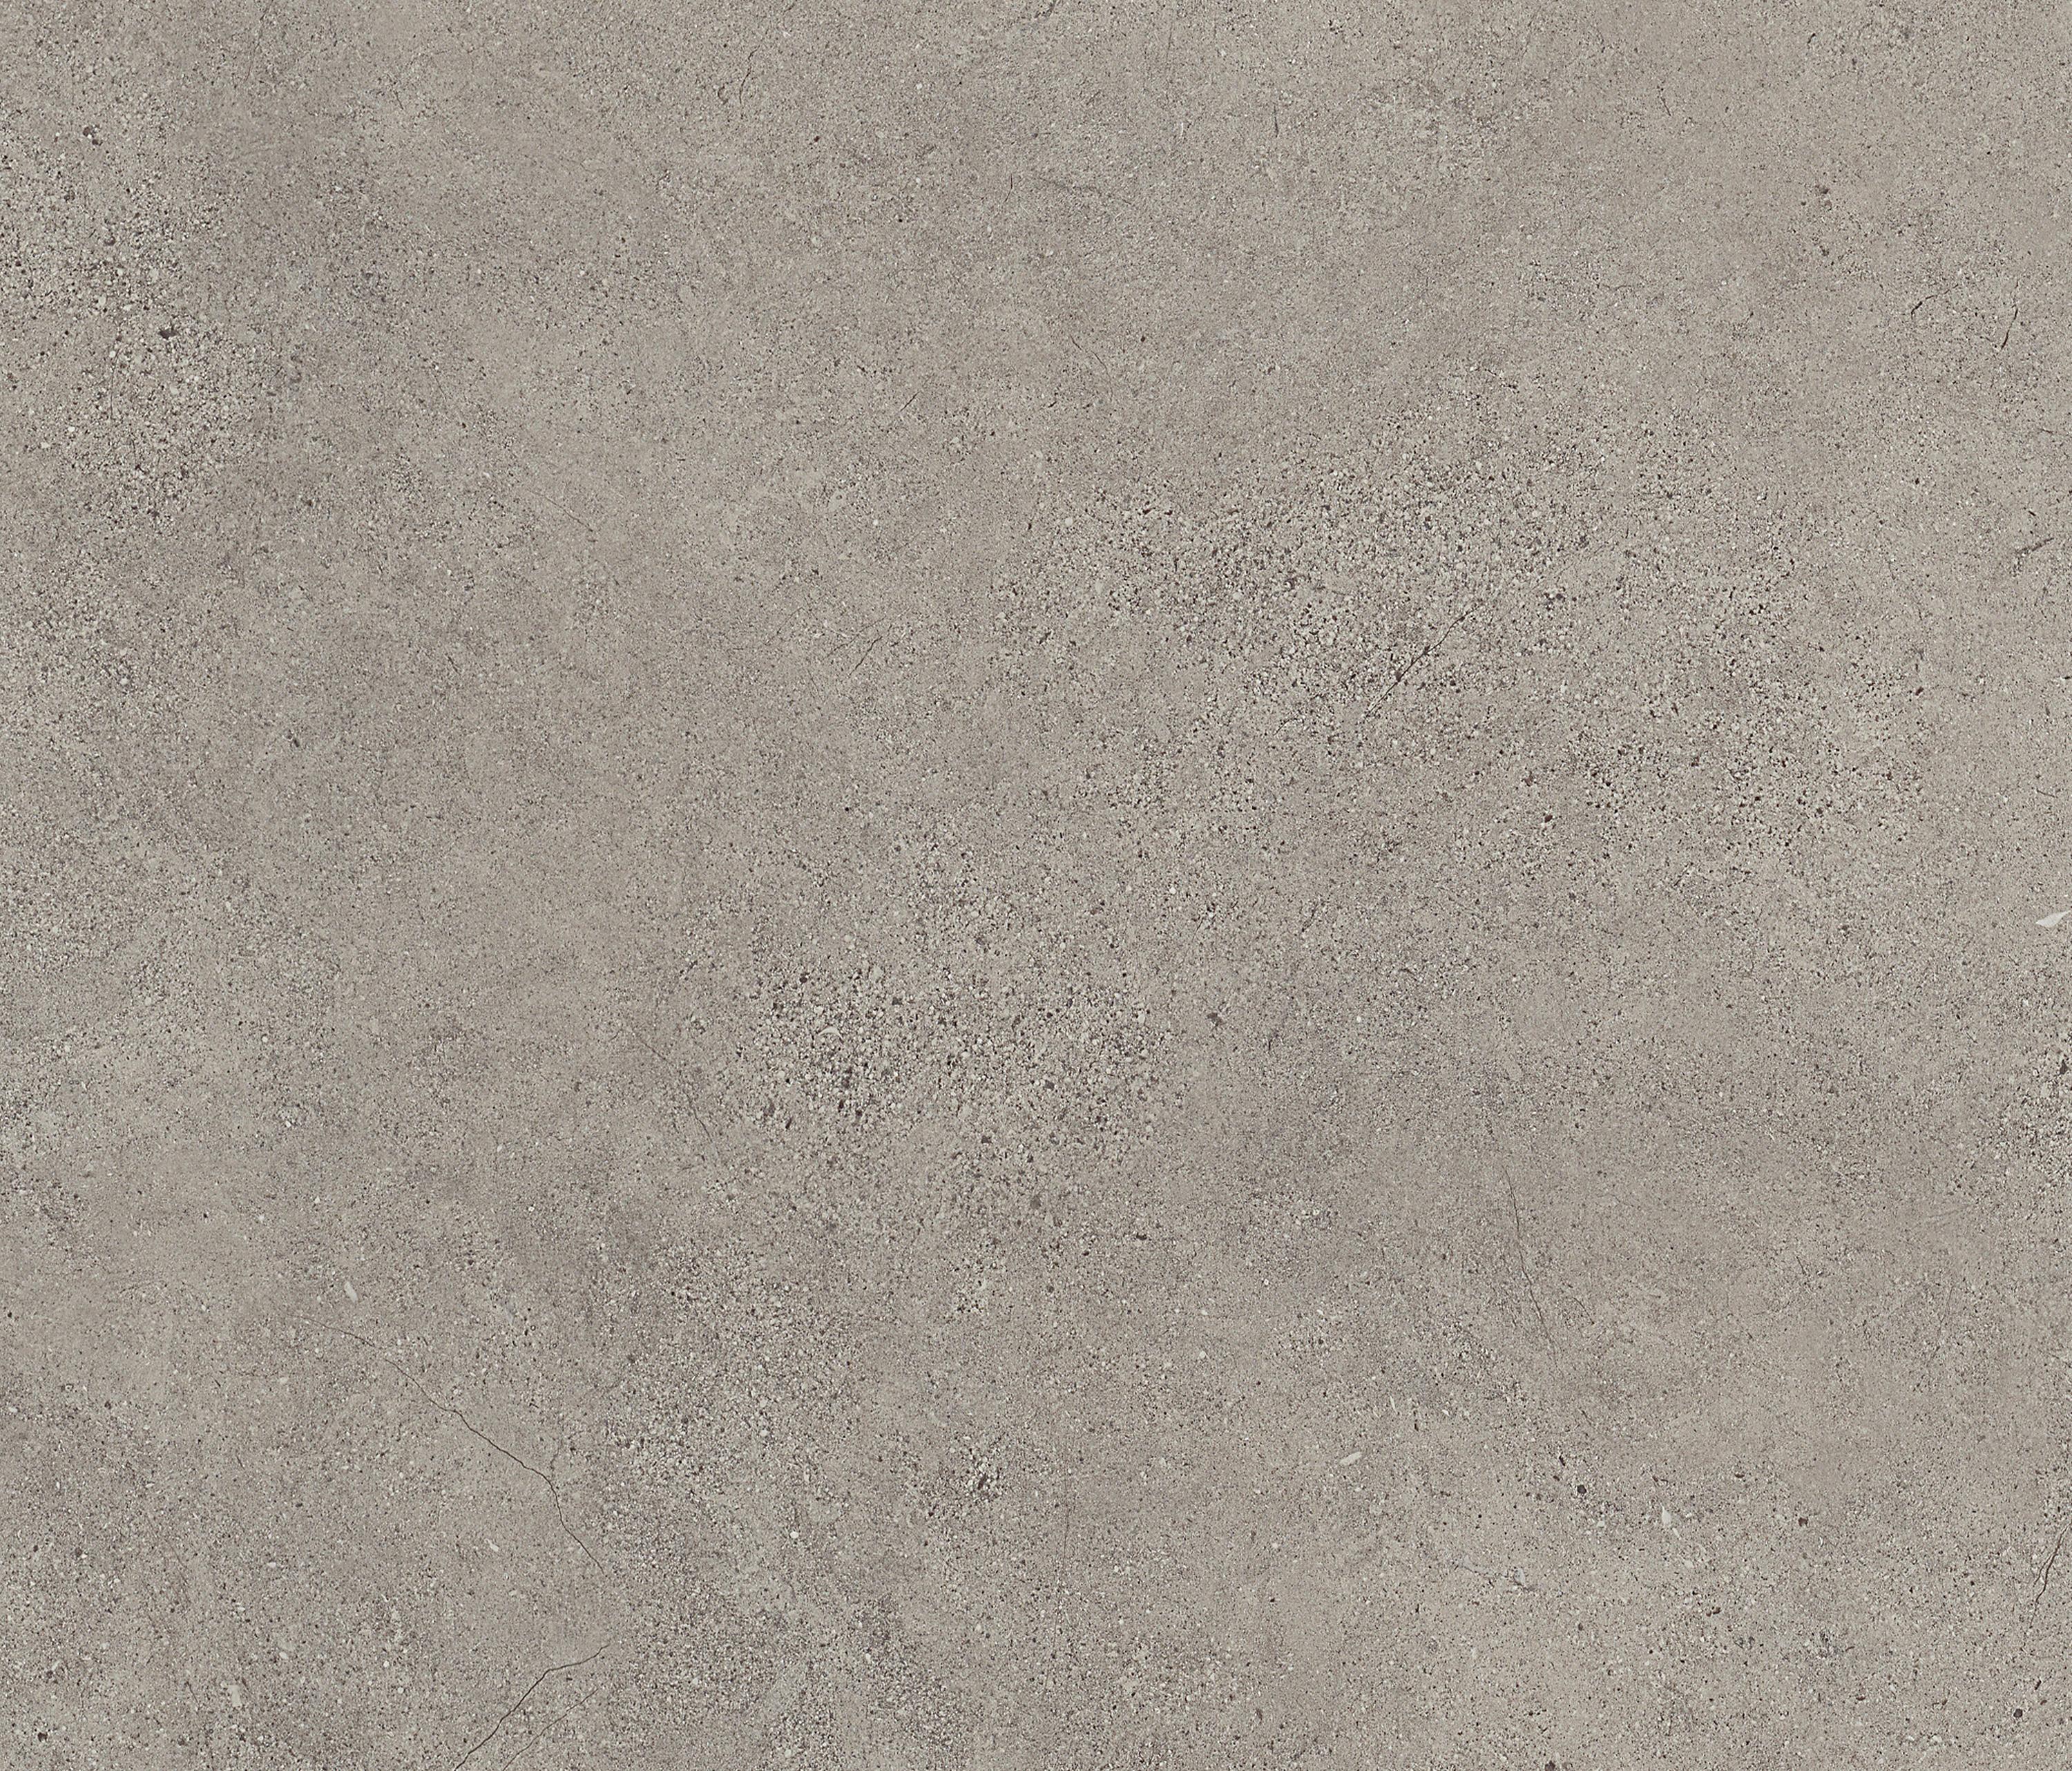 Concrete stone. Бетон светлый СС 8048 wdmgroup collection Loft. Бетон серый м103. ПВХ пленка серый бетон 57805-77. Текстура бетона.